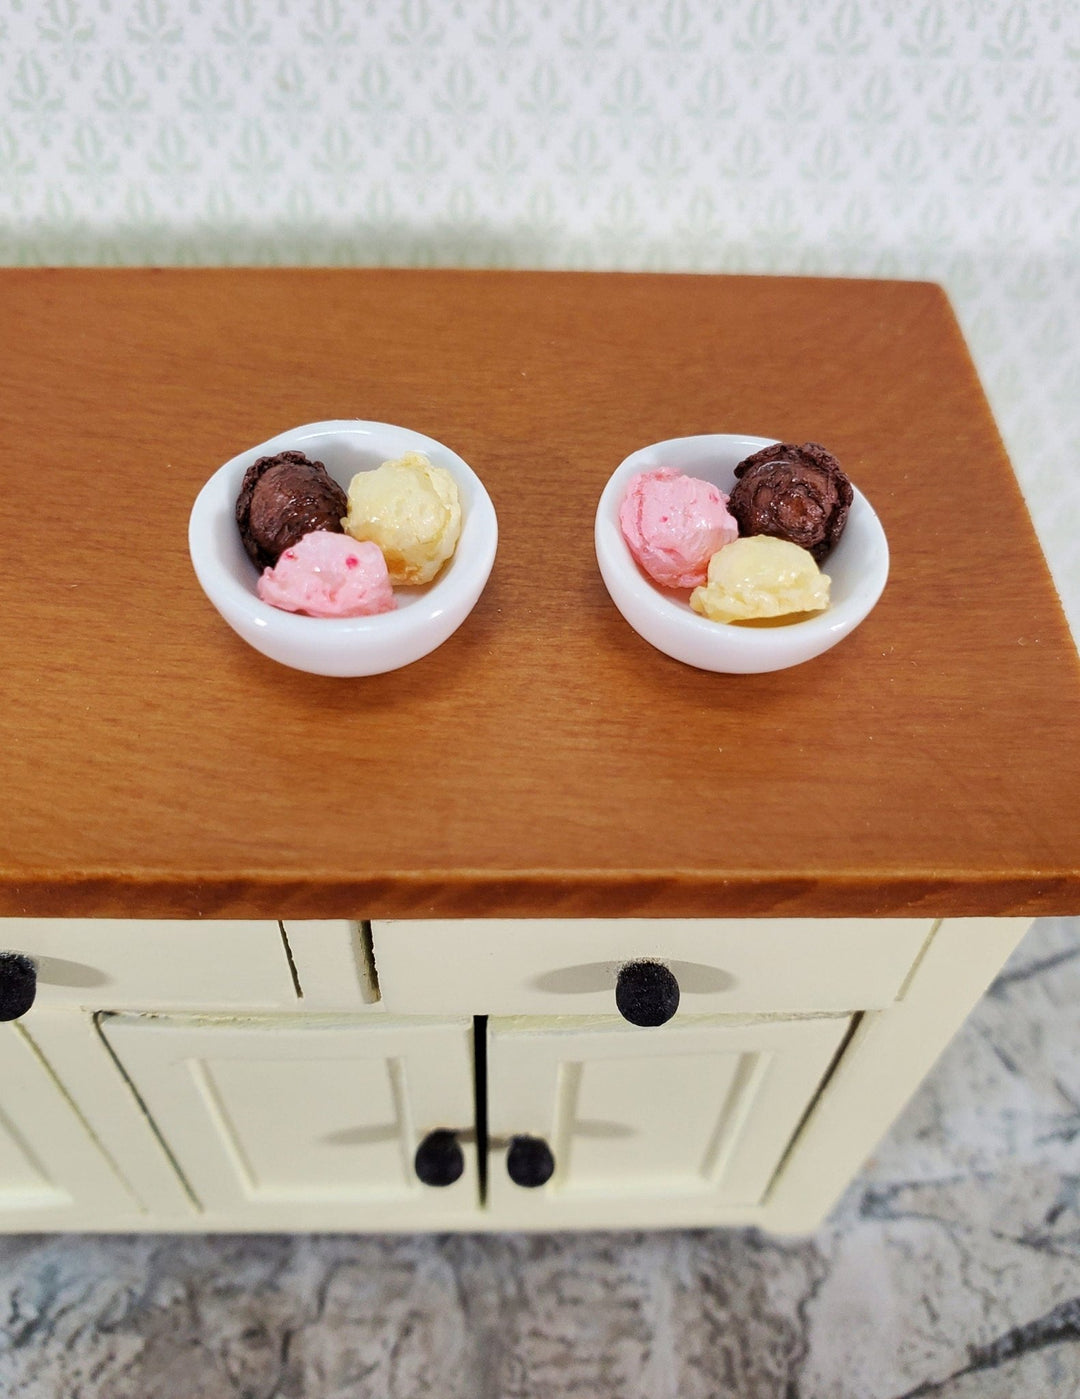 Dollhouse Ice Cream 6 Scoops Vanilla Chocolate Strawberry 1:12 Scale Dessert Food by Falcon - Miniature Crush